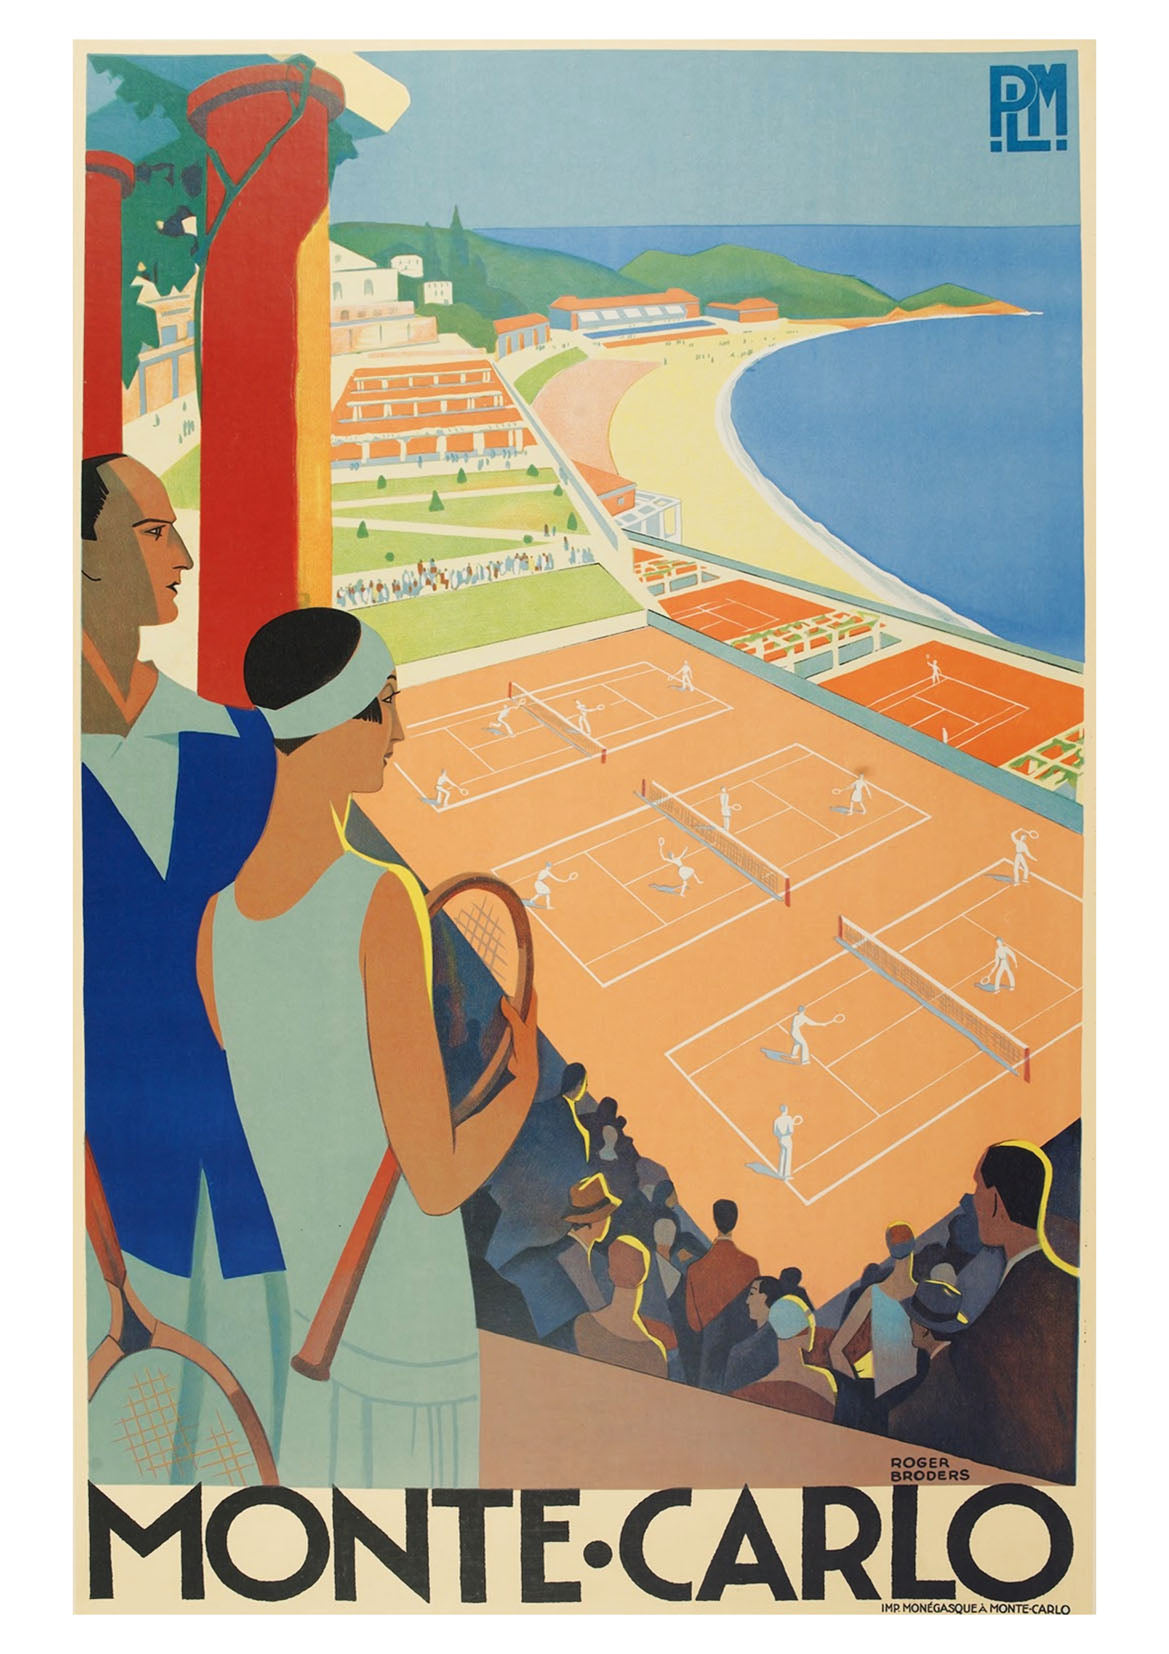 MONTE CARLO TRAVEL POSTER: Vintage Tennis Art Print